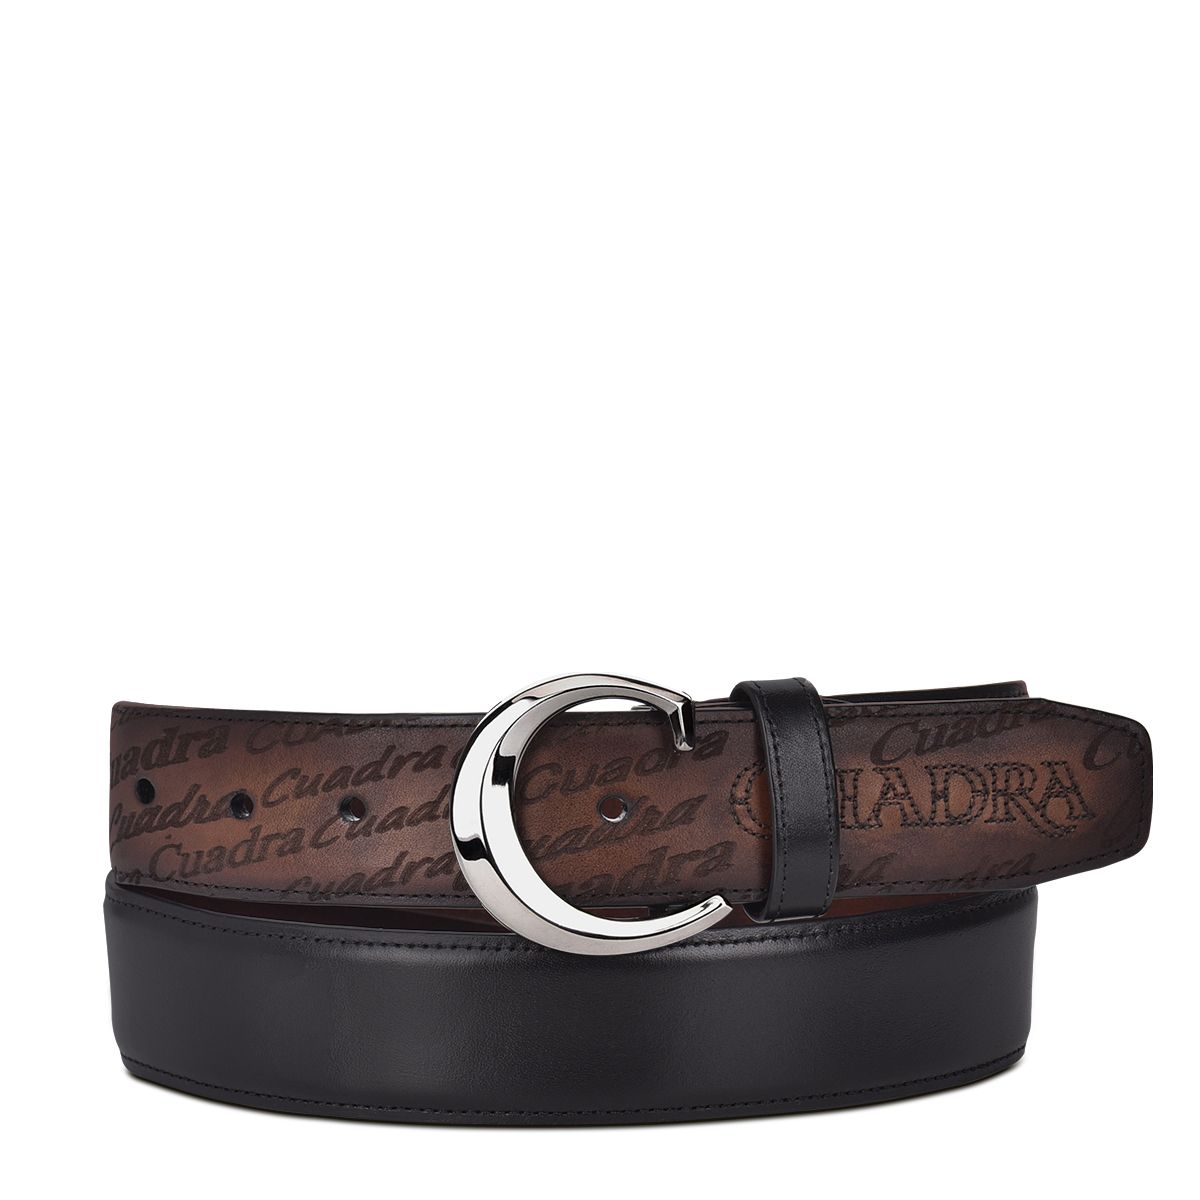 CS540RS - Cuadra negro casual dress cowhide leather belt for men-FRANCO CUADRA-Kuet-Cuadra-Boots